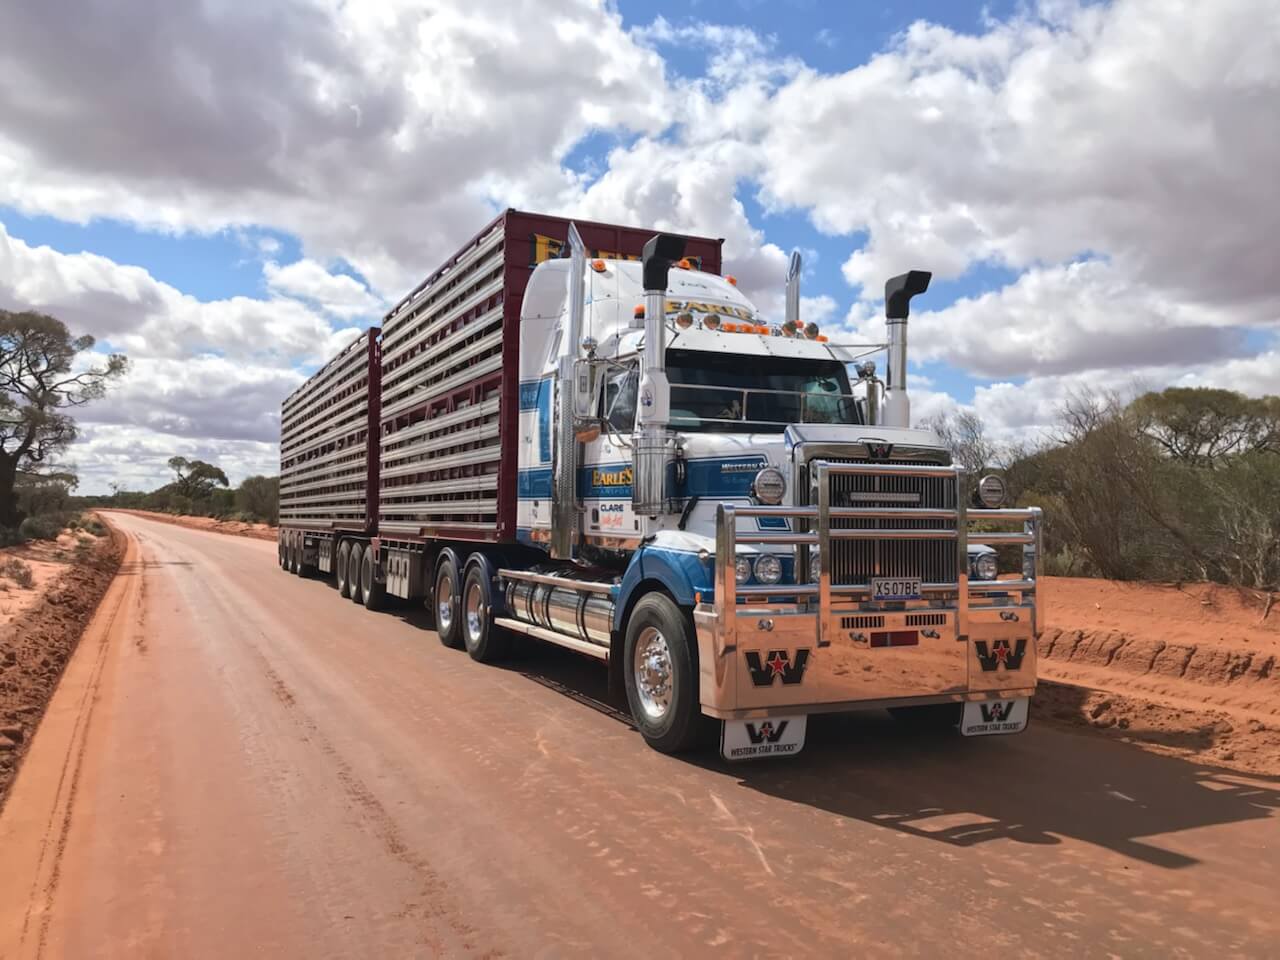 Expert Services of Livestock Transport In Australia